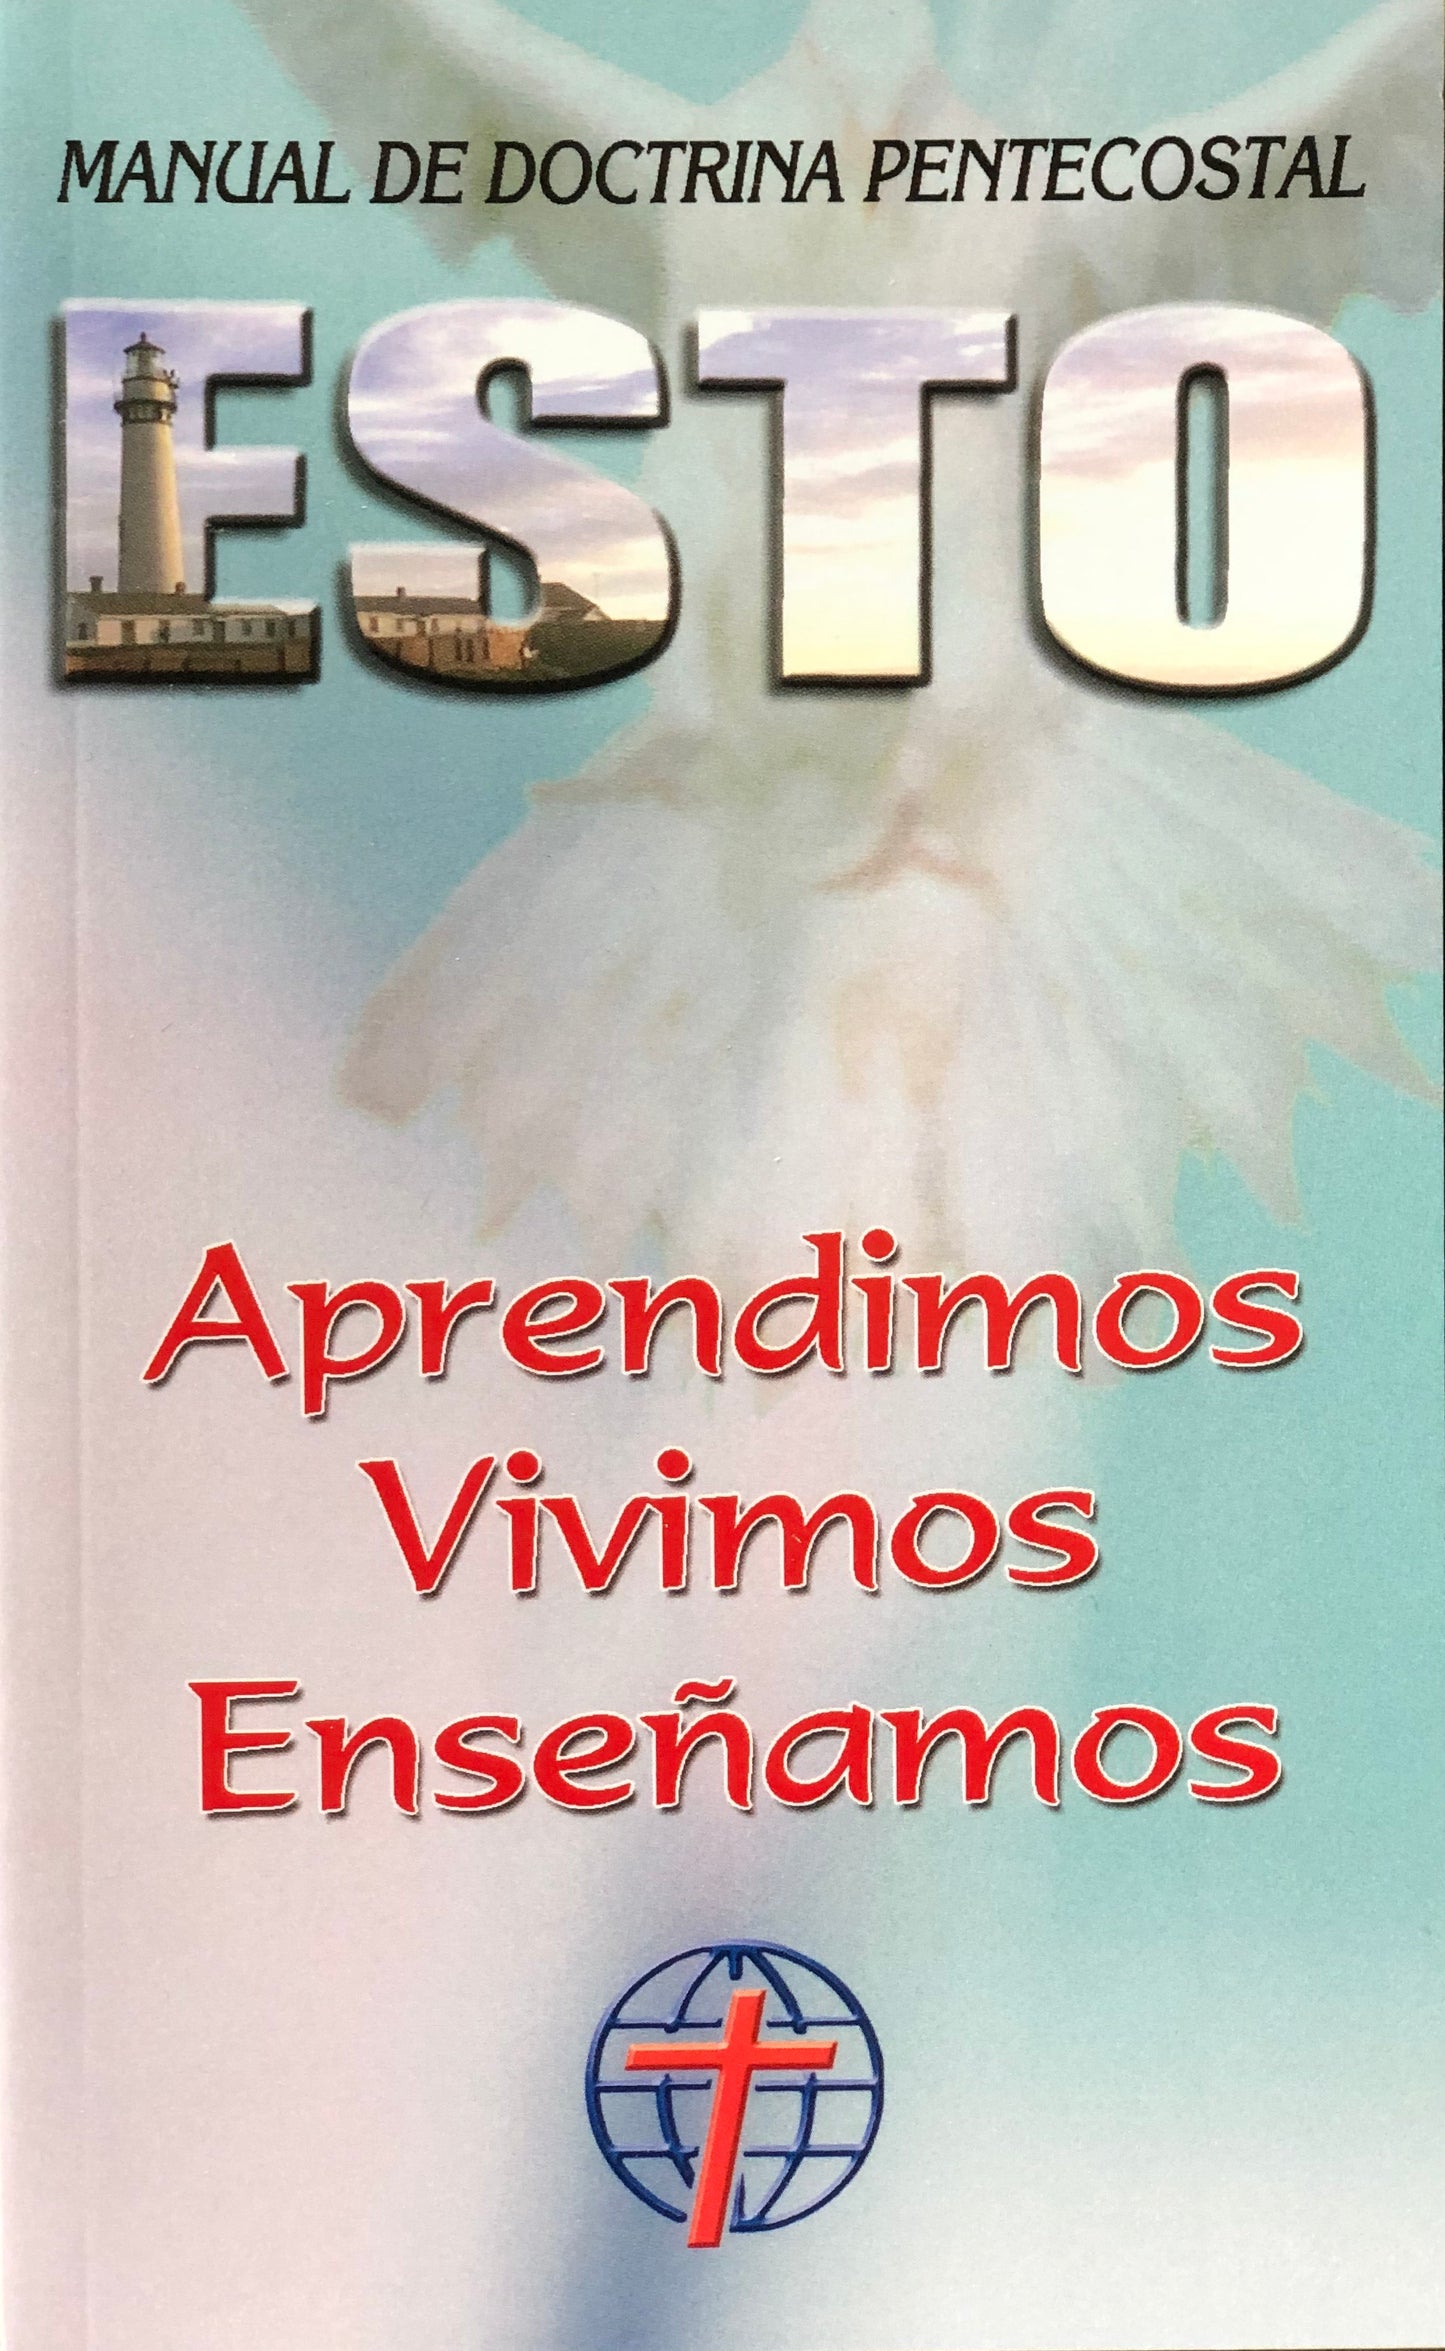 ESTO - Aprendimos, Vivimos, Enseñamos - Manual de Doctrina Pentecostal